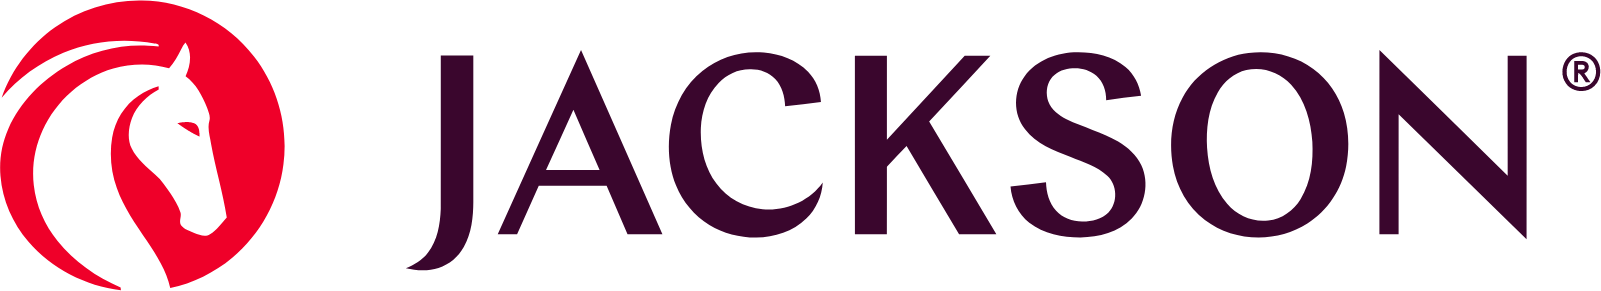 Jackson Financial logo large (transparent PNG)